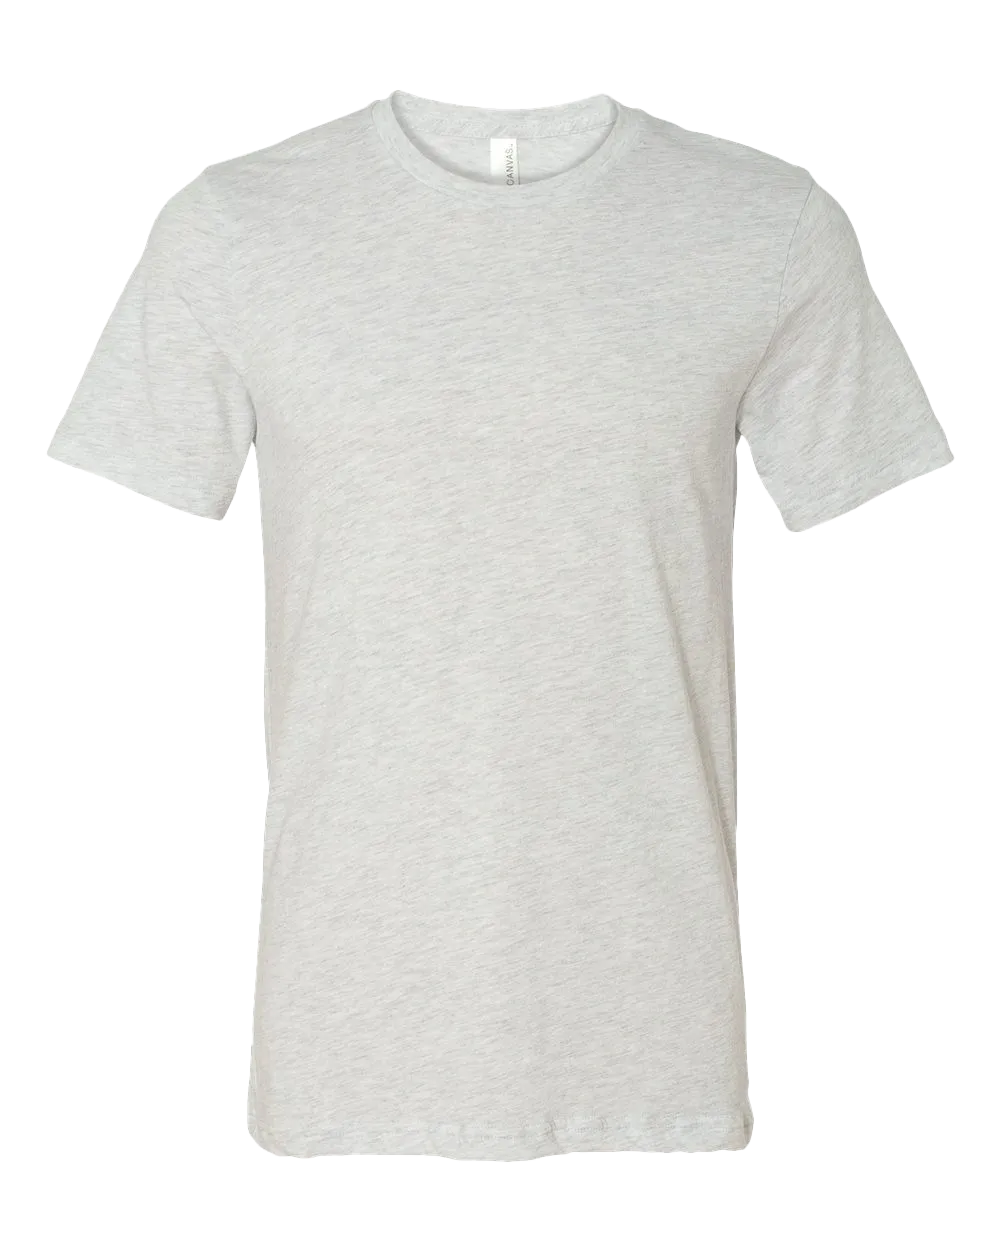 Unisex Blank T-Shirts